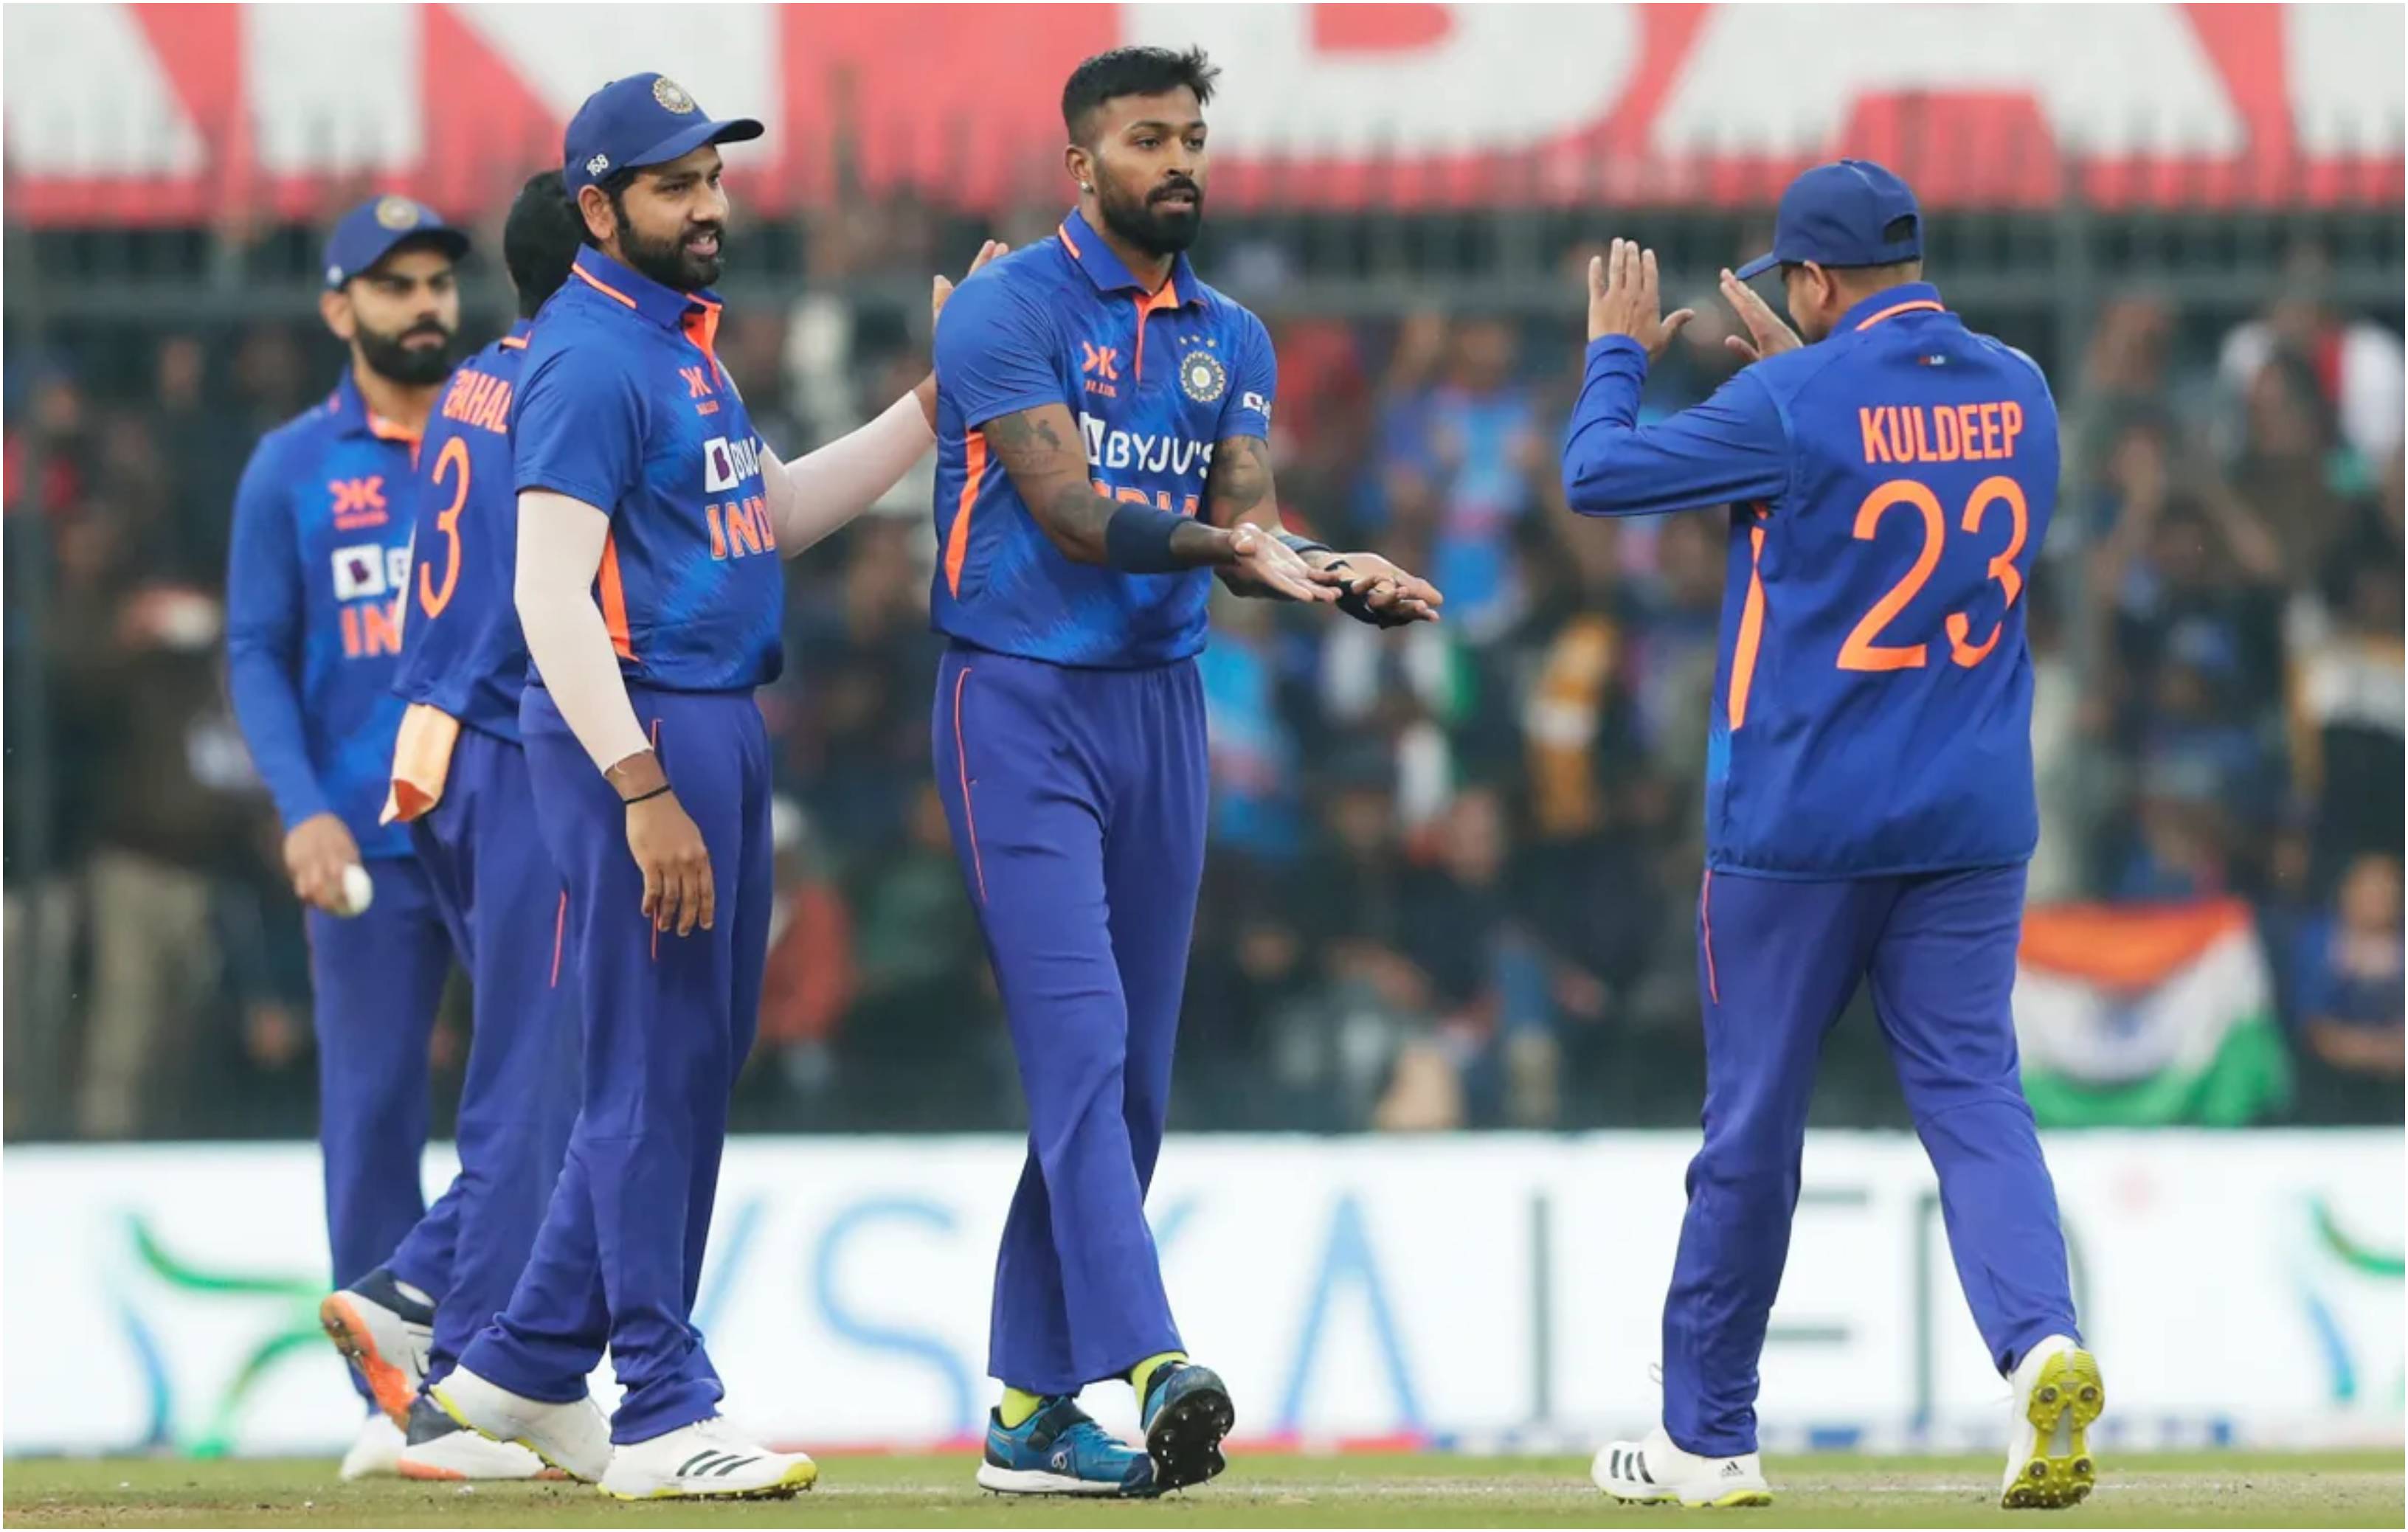 Hardik Pandya will captain Indian team in Mumbai ODI | BCCI